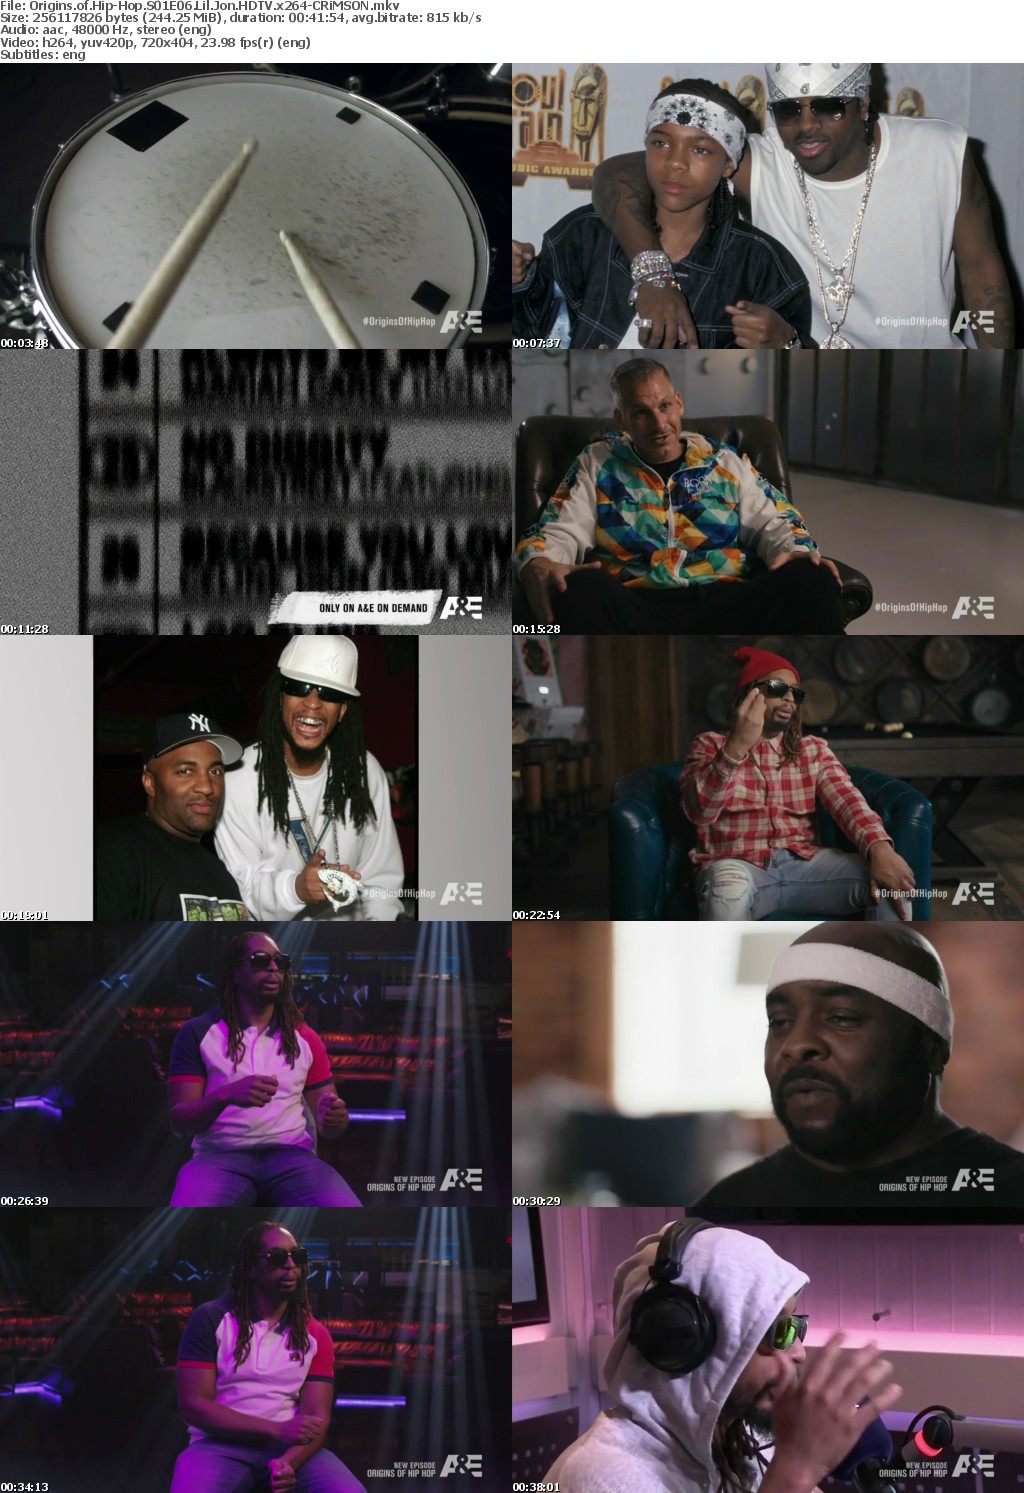 Origins of Hip-Hop S01E06 Lil Jon HDTV x264-CRiMSON